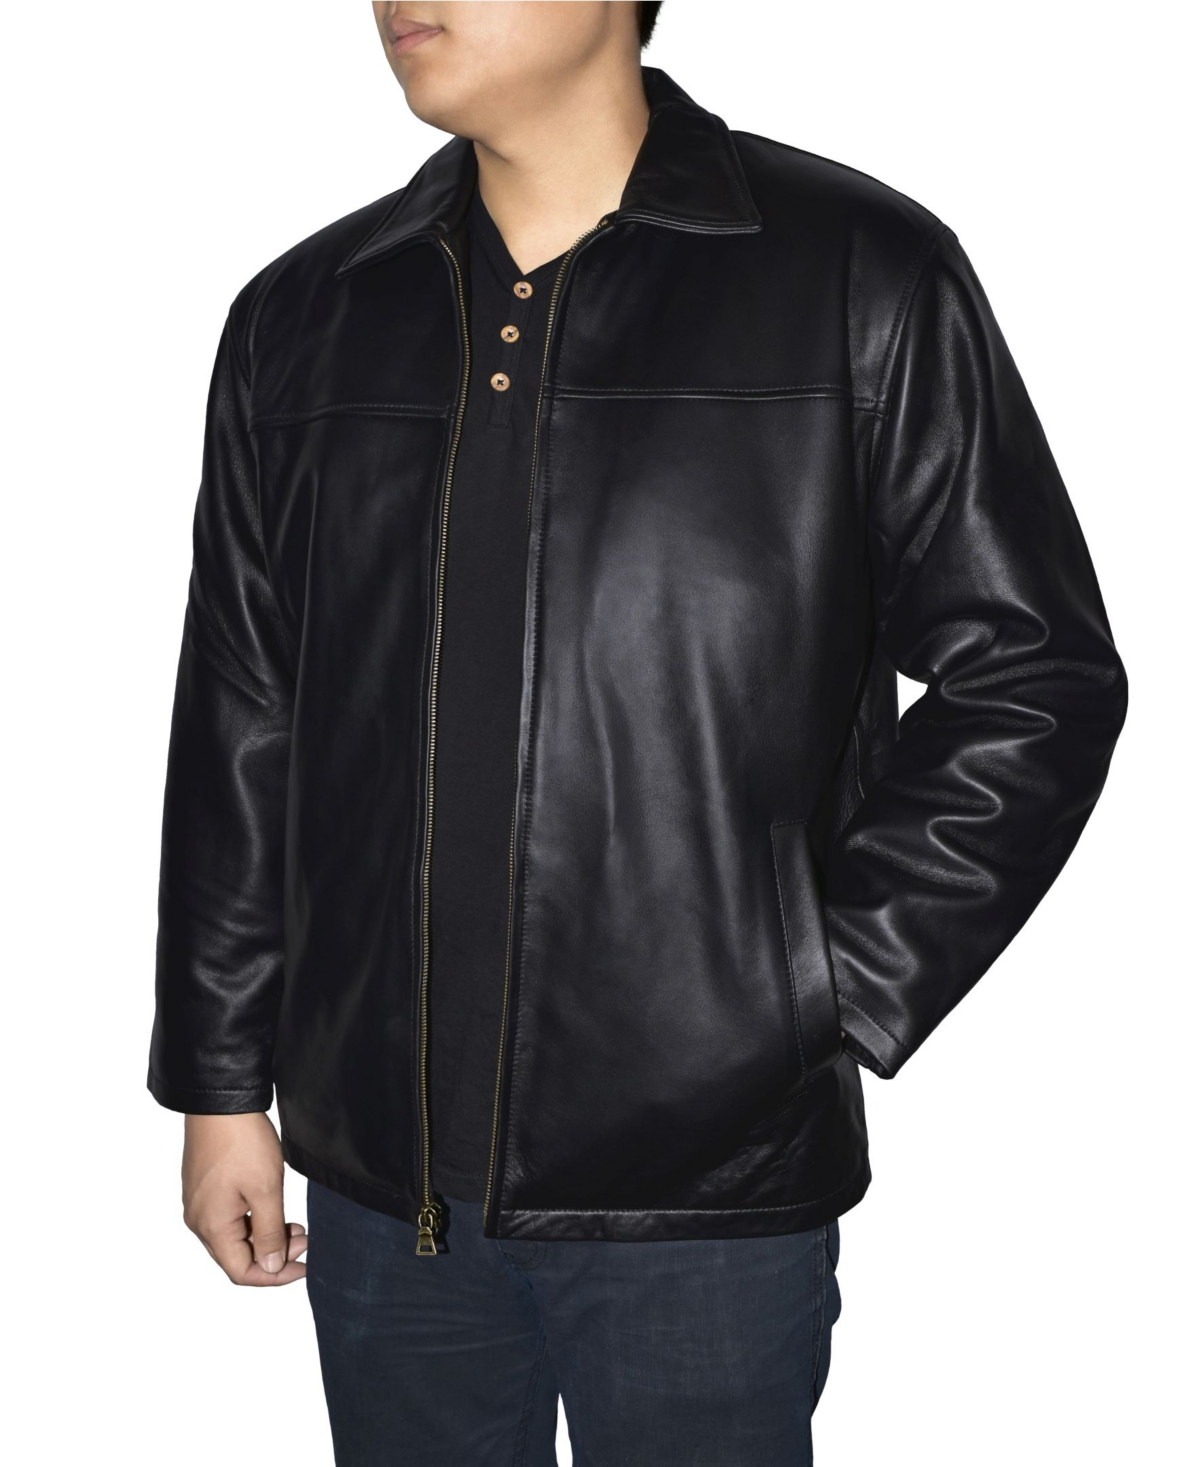 Retro Leather Men's Full Zip Jacket - Black